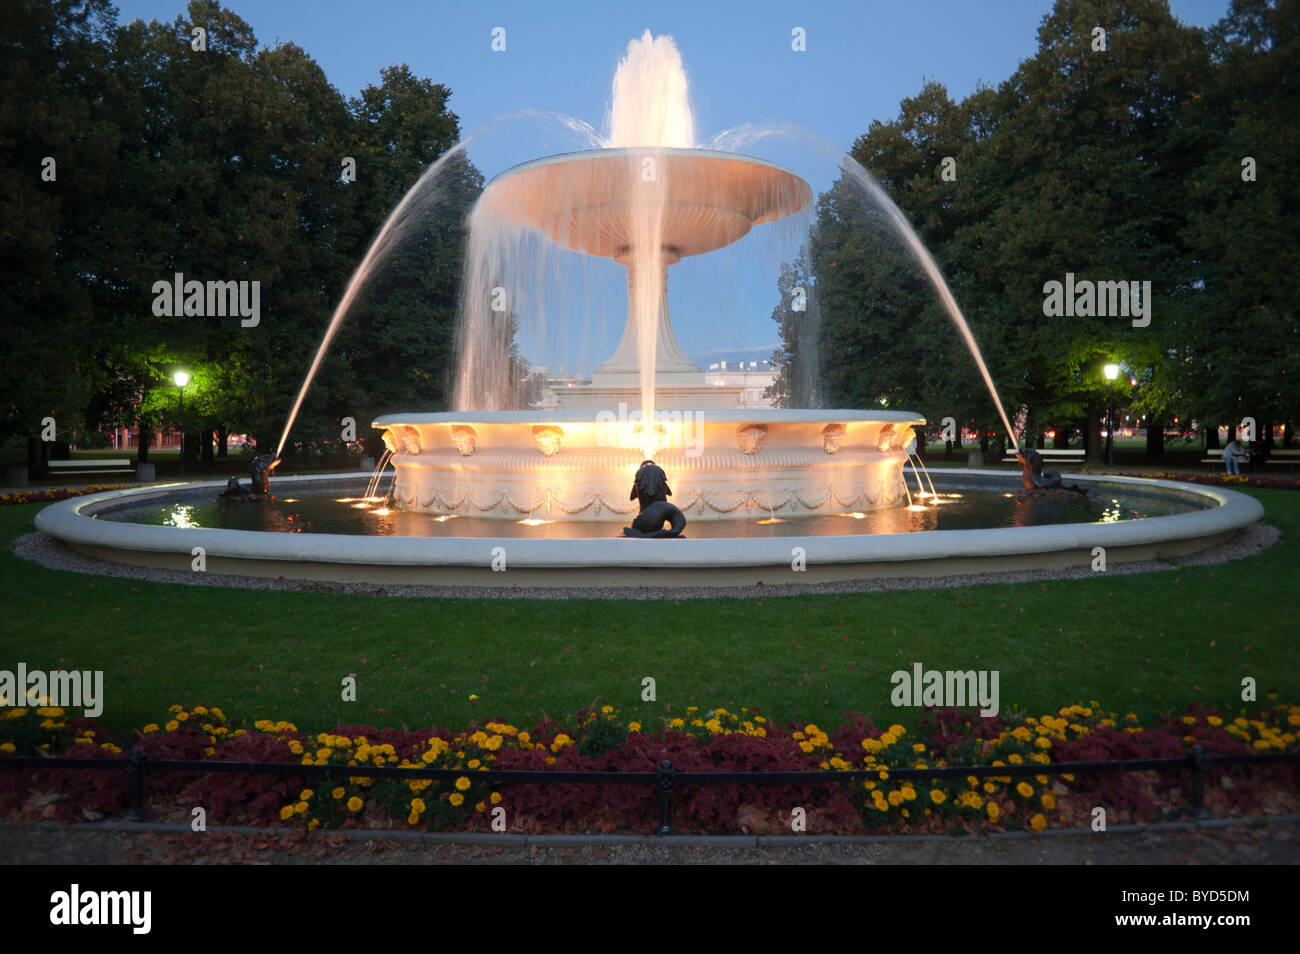 Fountain in a park, Warsaw, Masovia province, Poland, Europe Stock Photo